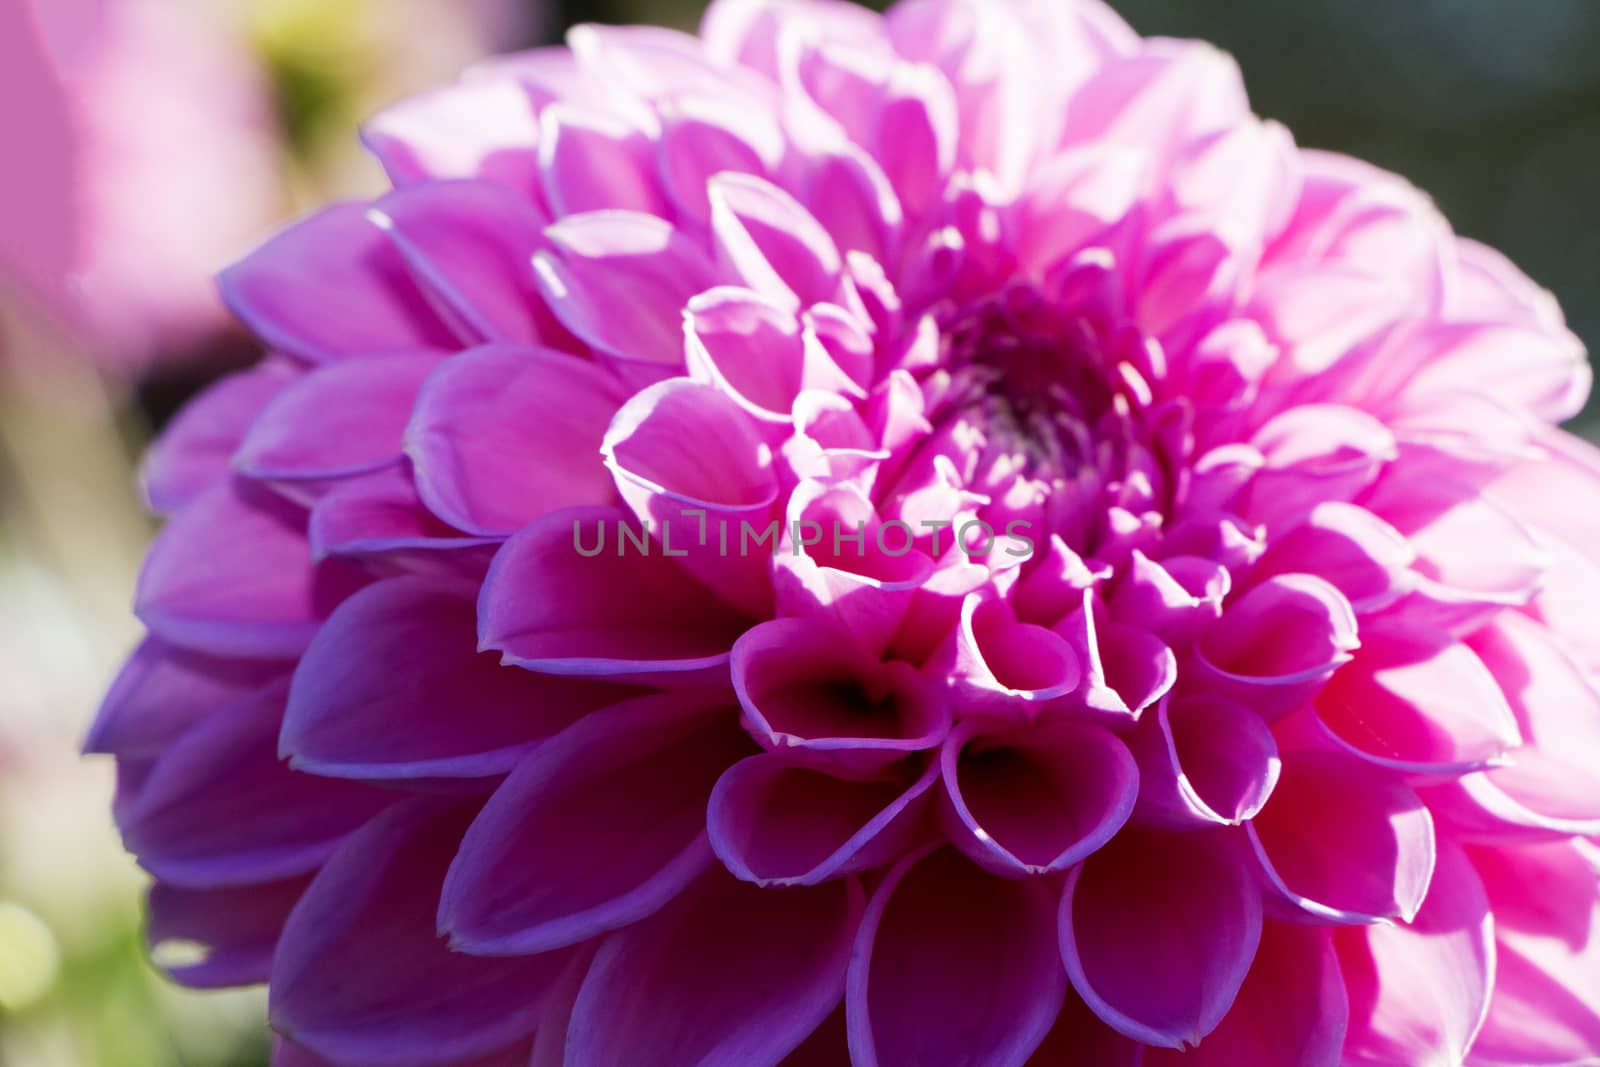 Symmetrical pink flower in sunlight in autumn.